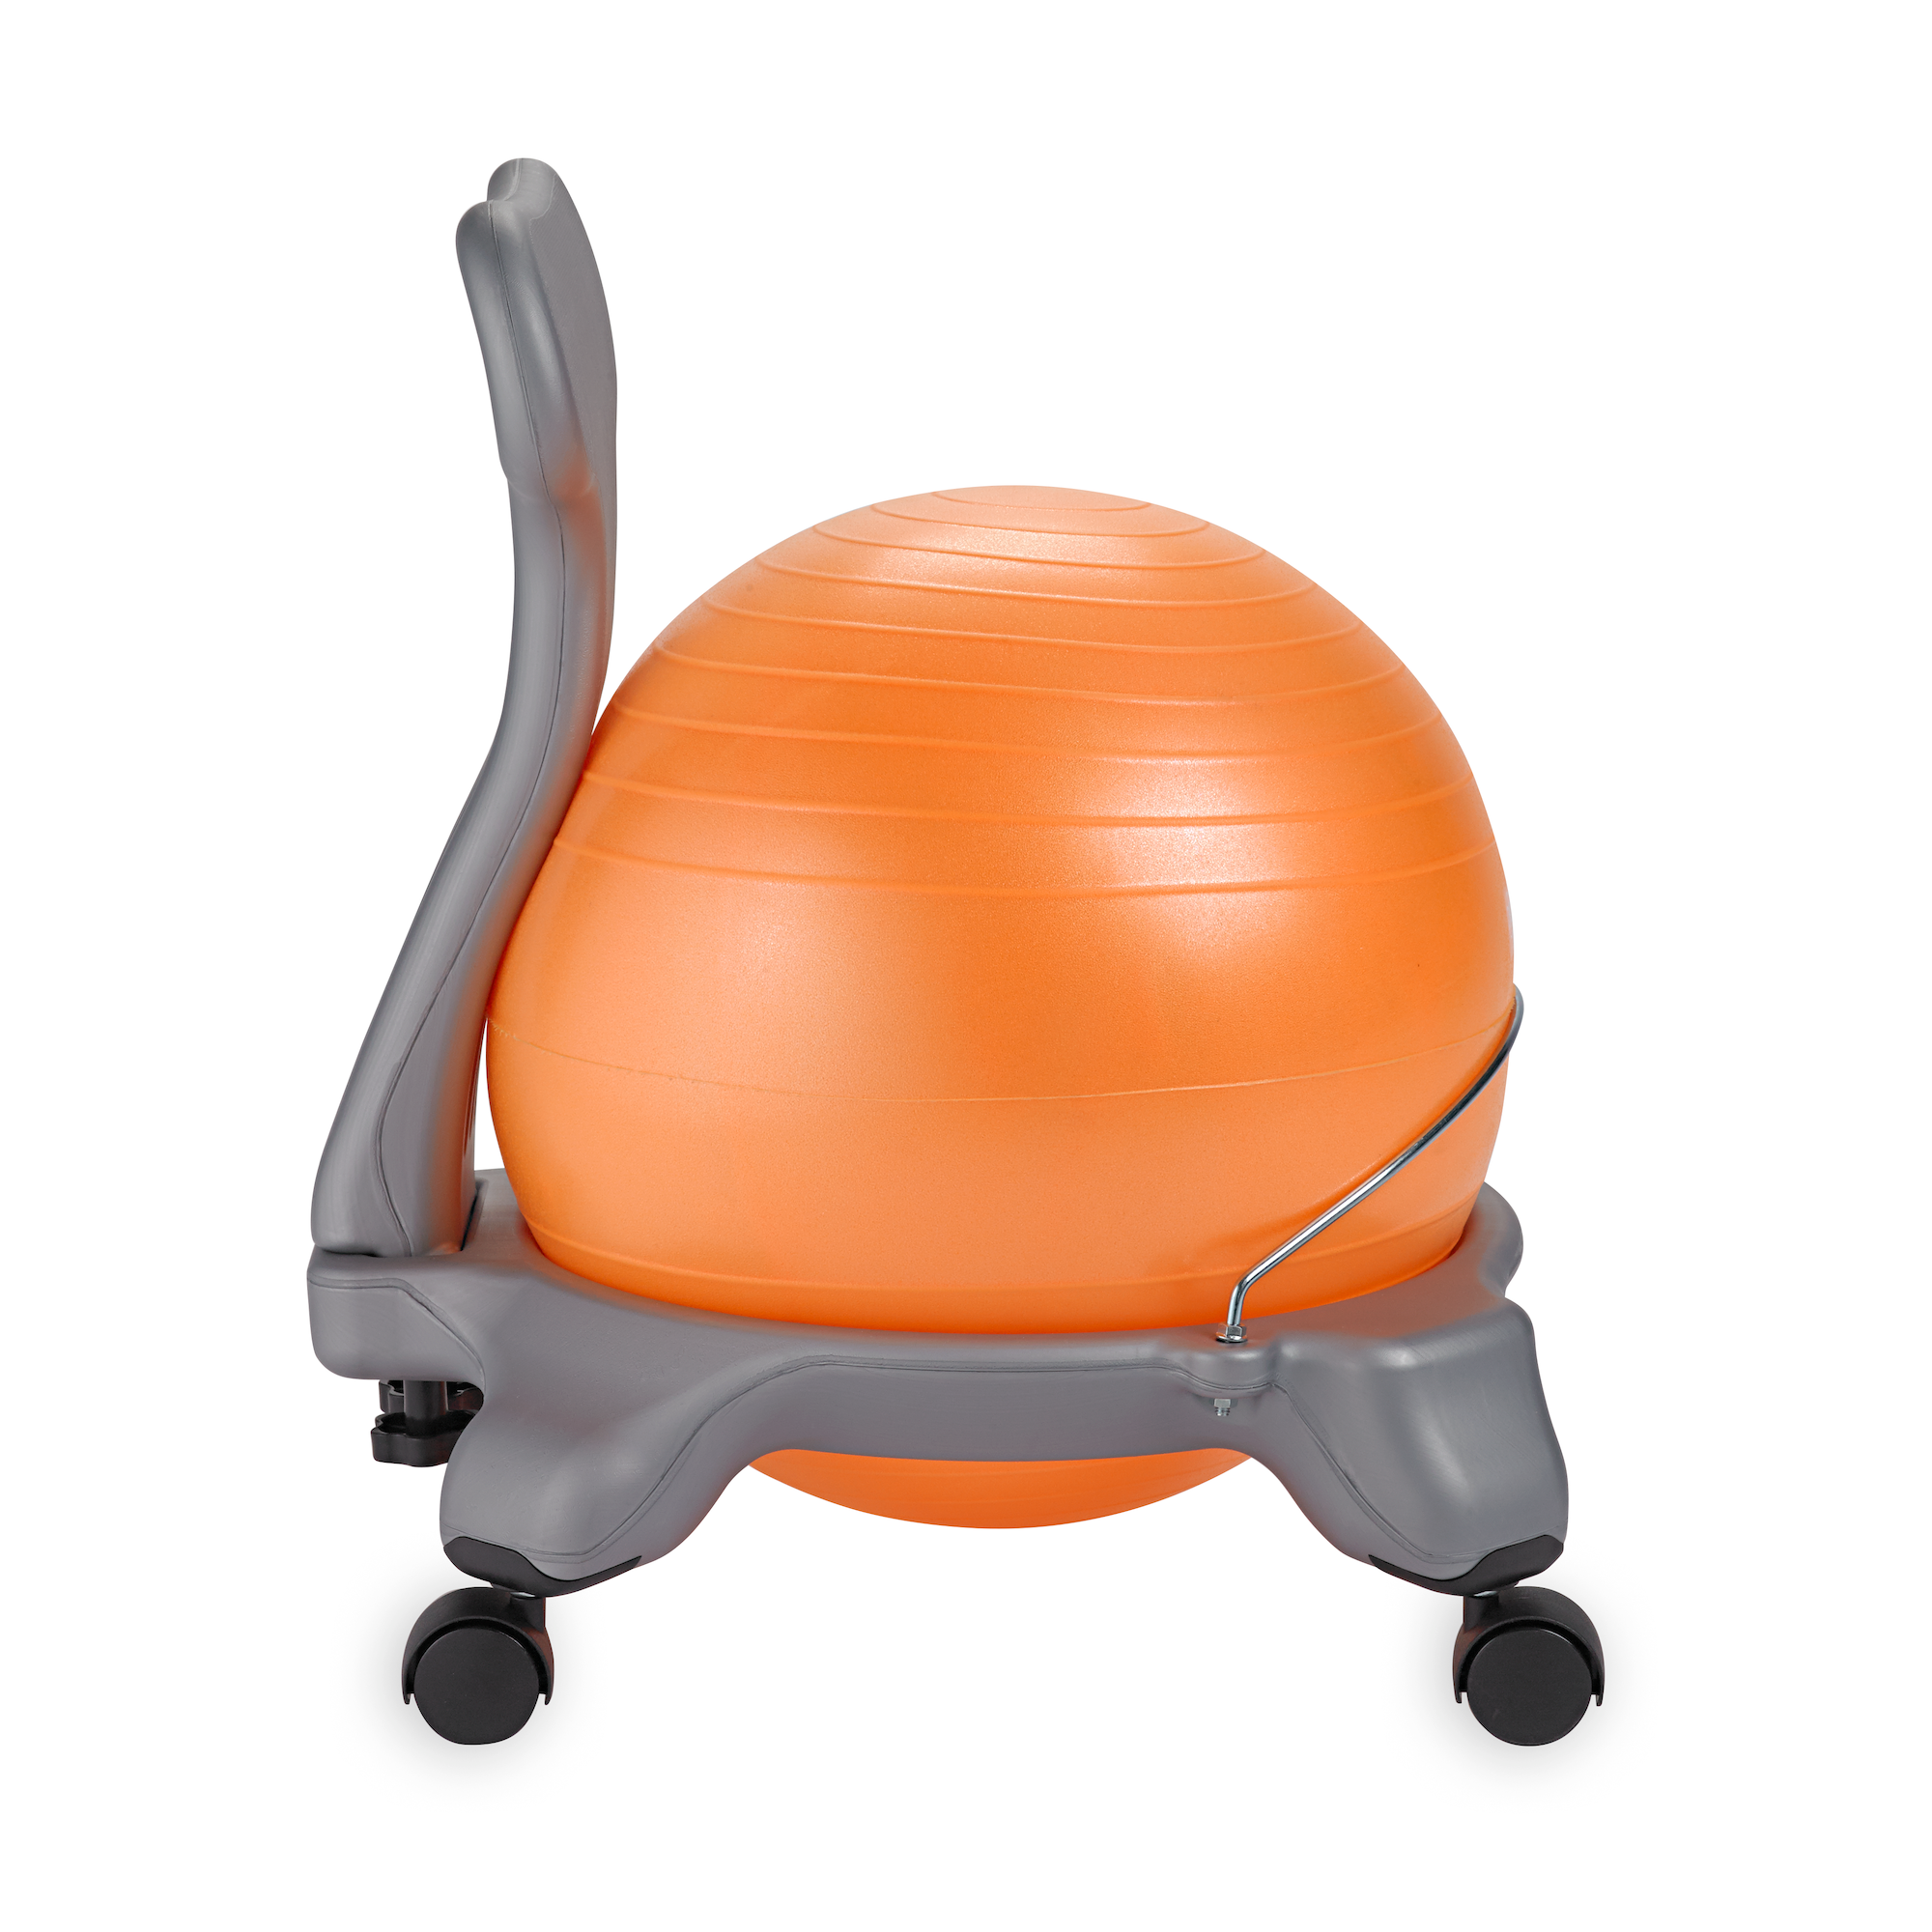 Gaiam Kids Classic Balance Ball® Chair Orange/Grey side